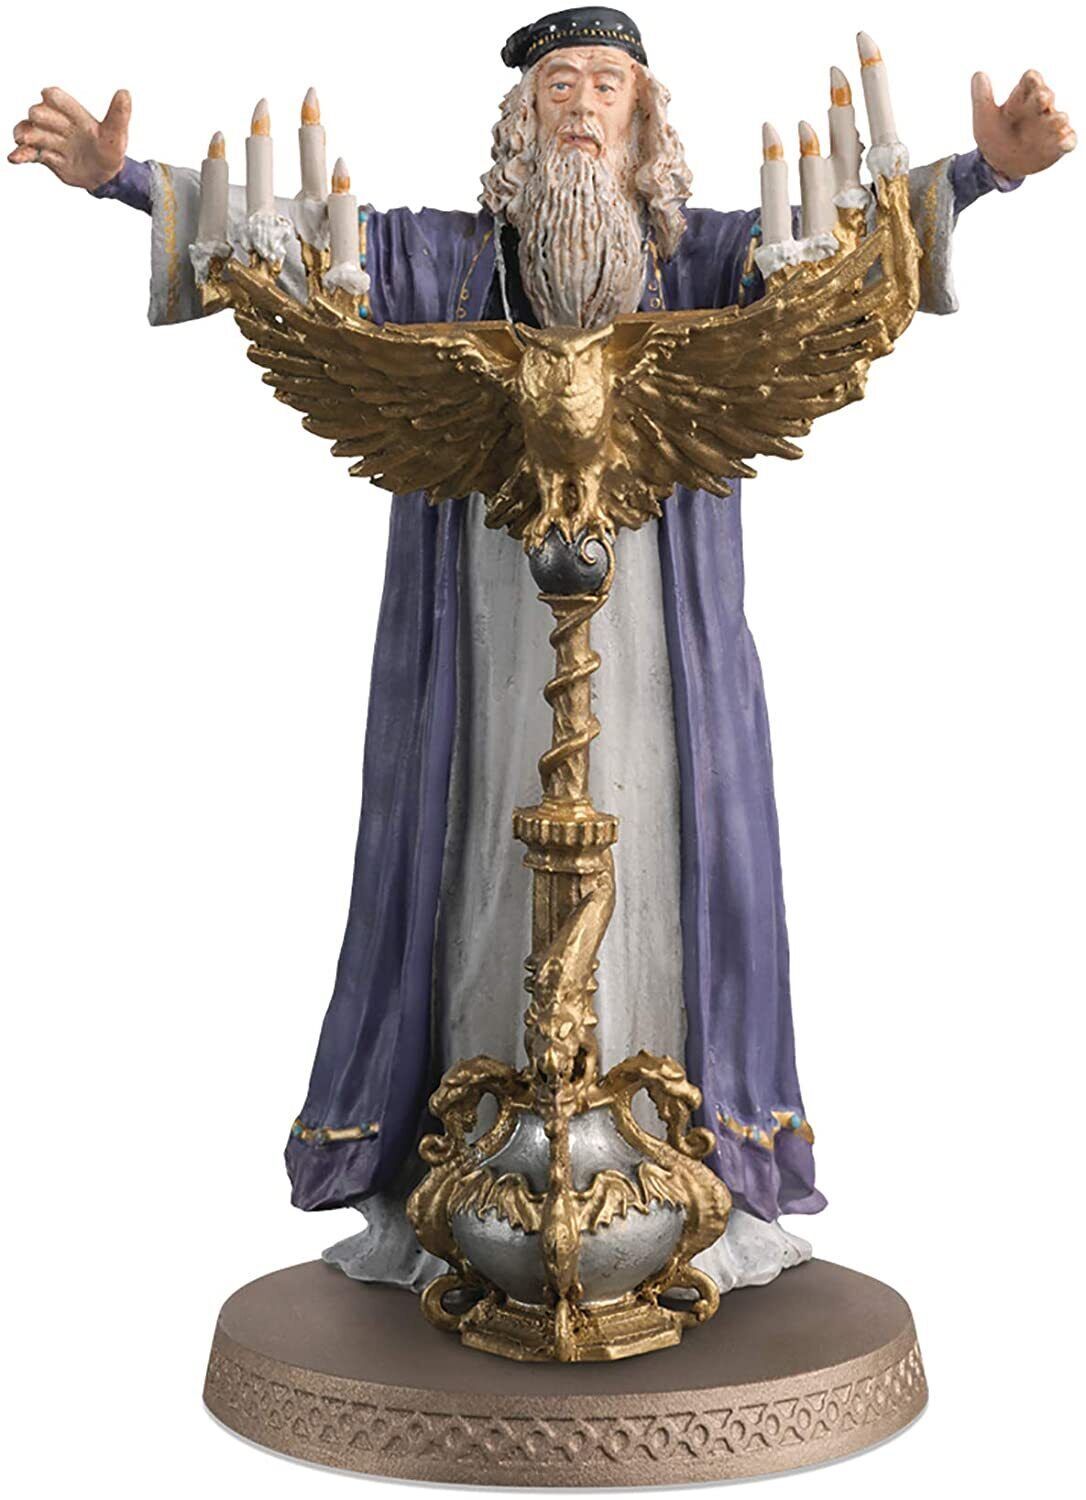 Eaglemoss Wizarding World Figurine Collection: #1 Professor Dumbledore Figurine - $54.44